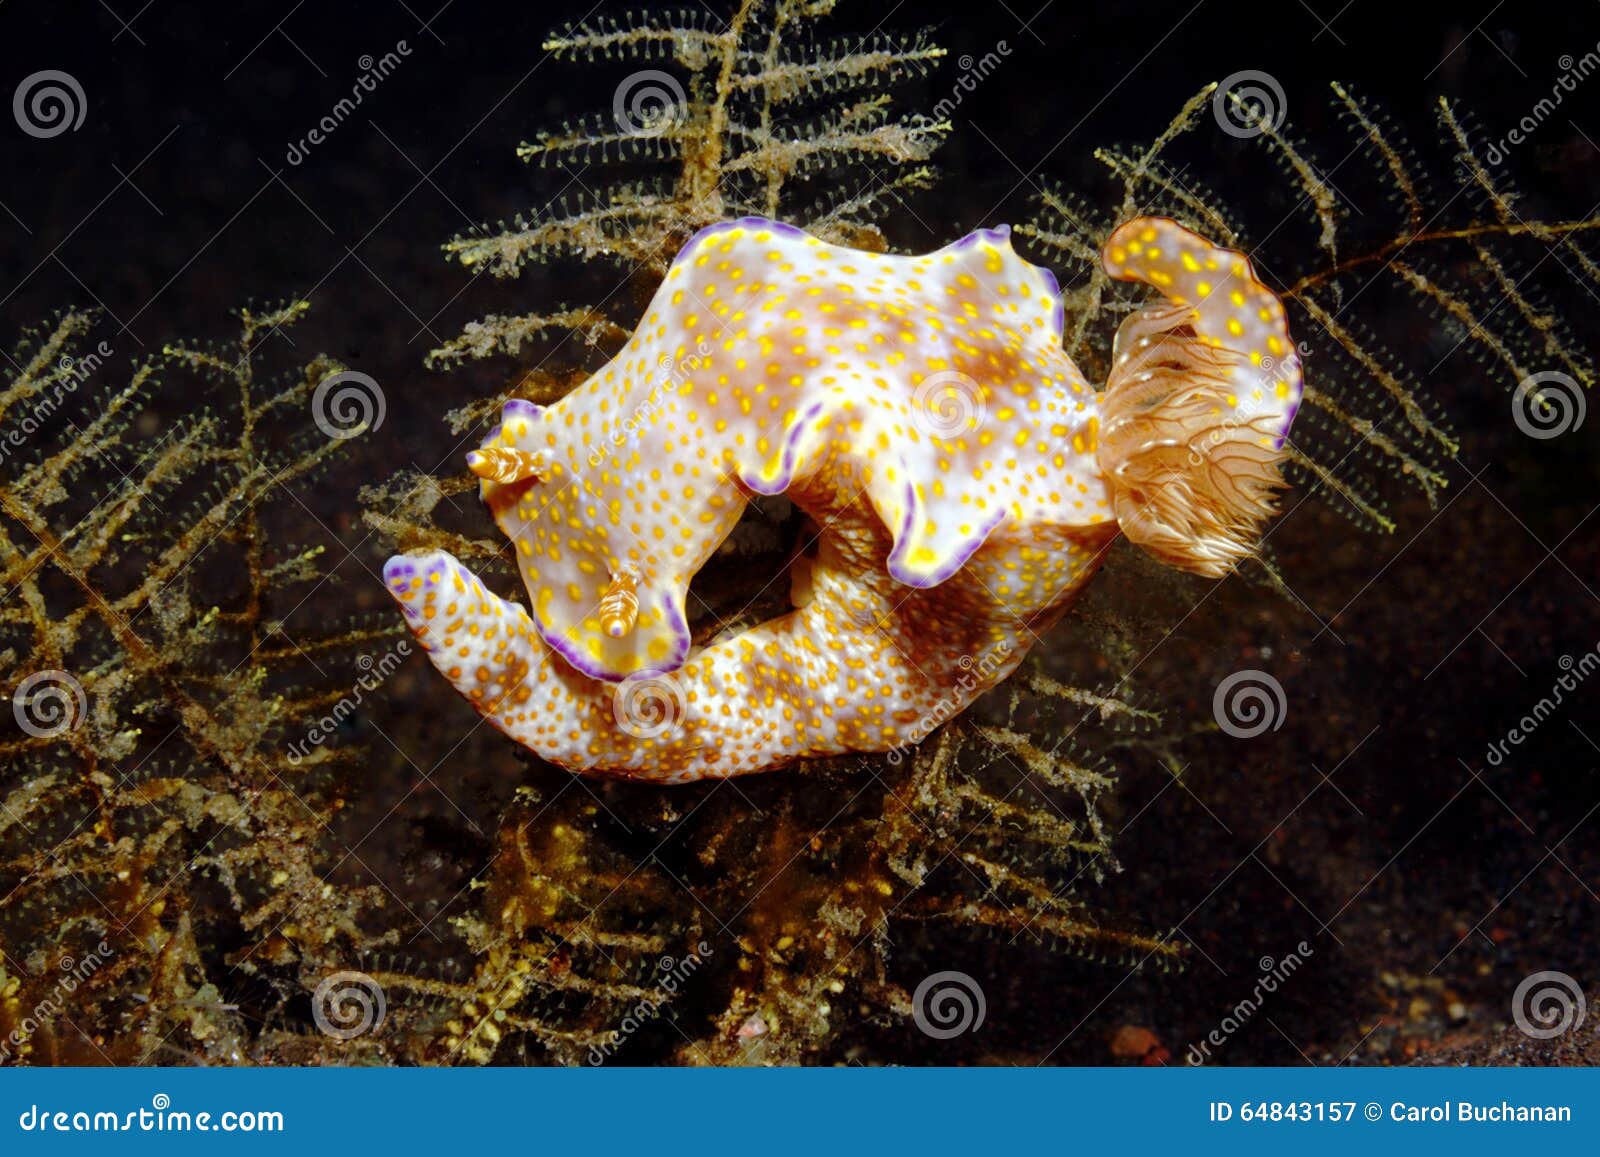 nudibranch, ceratosoma tenue